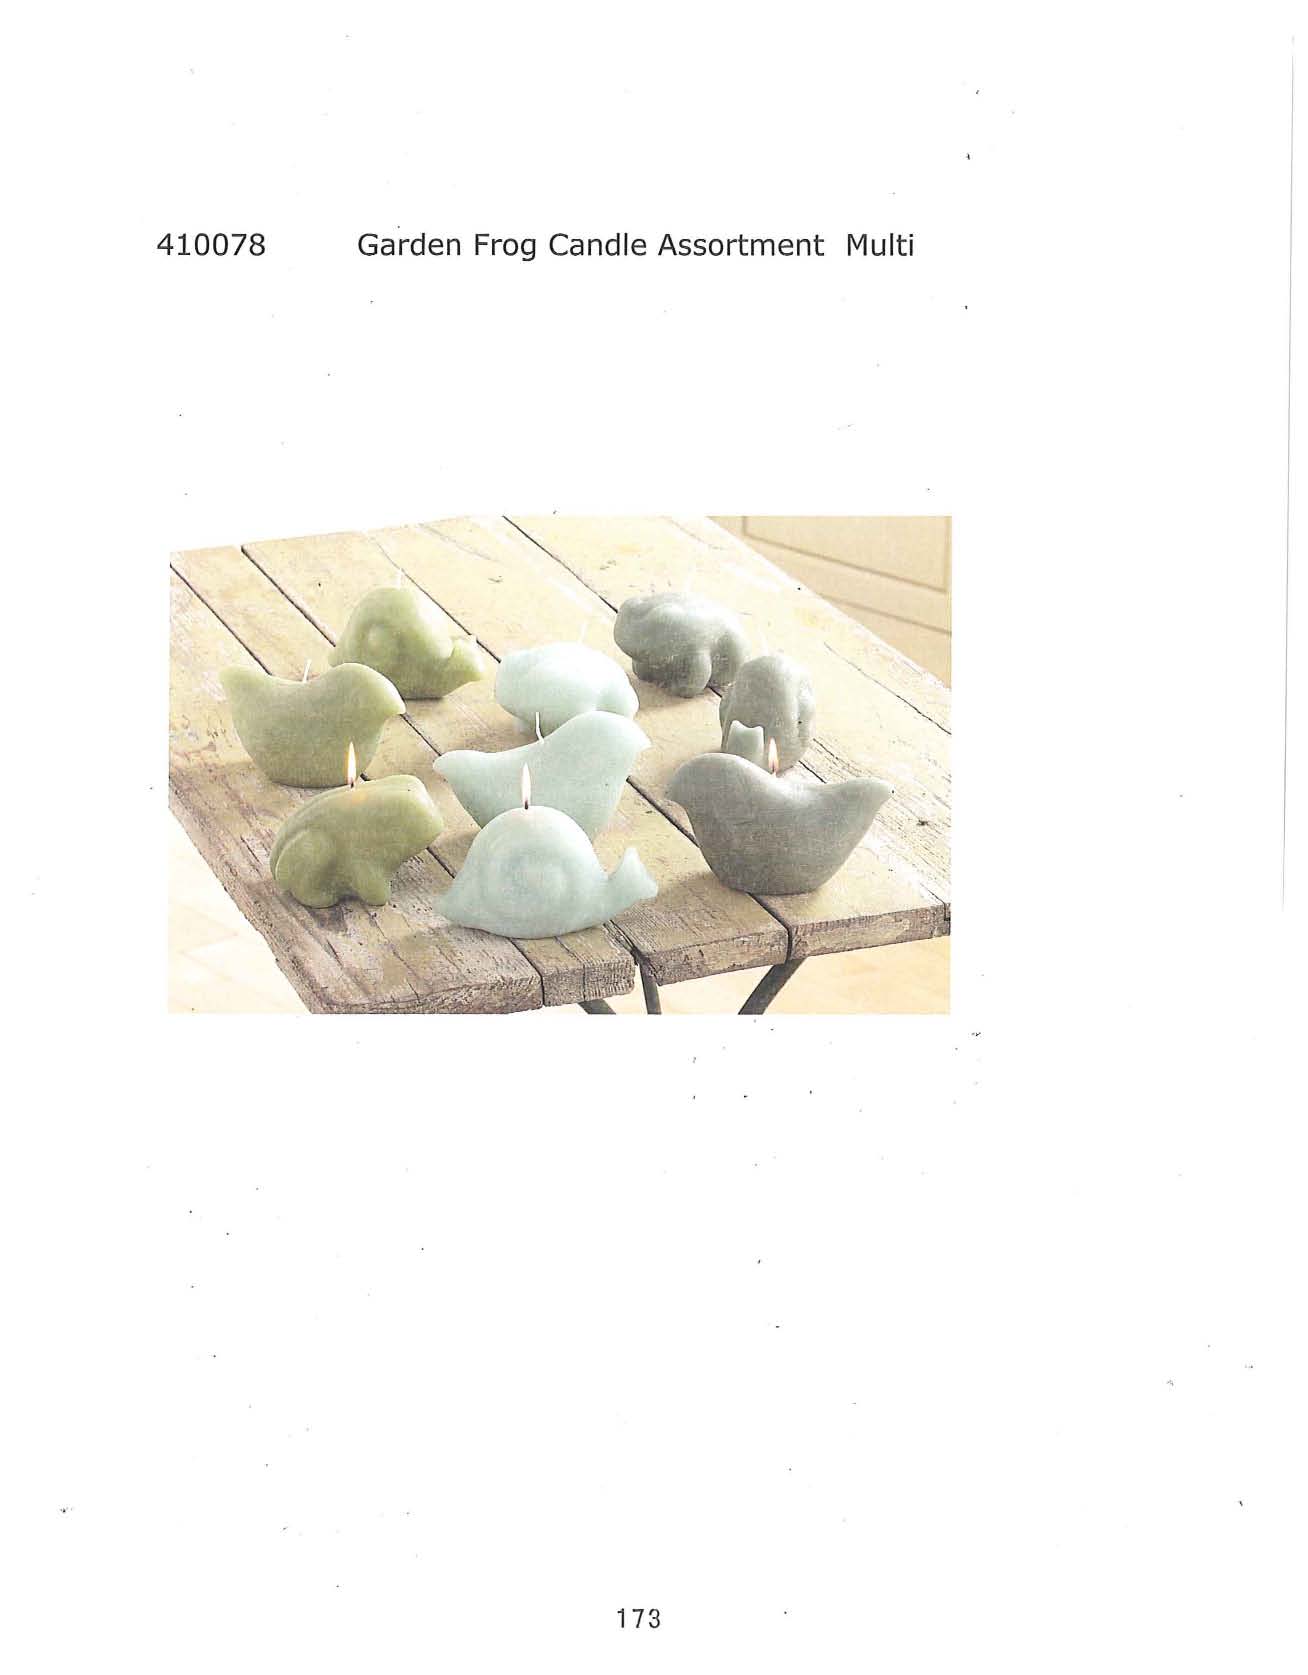 Garden Frog Candle Assortment - Multi